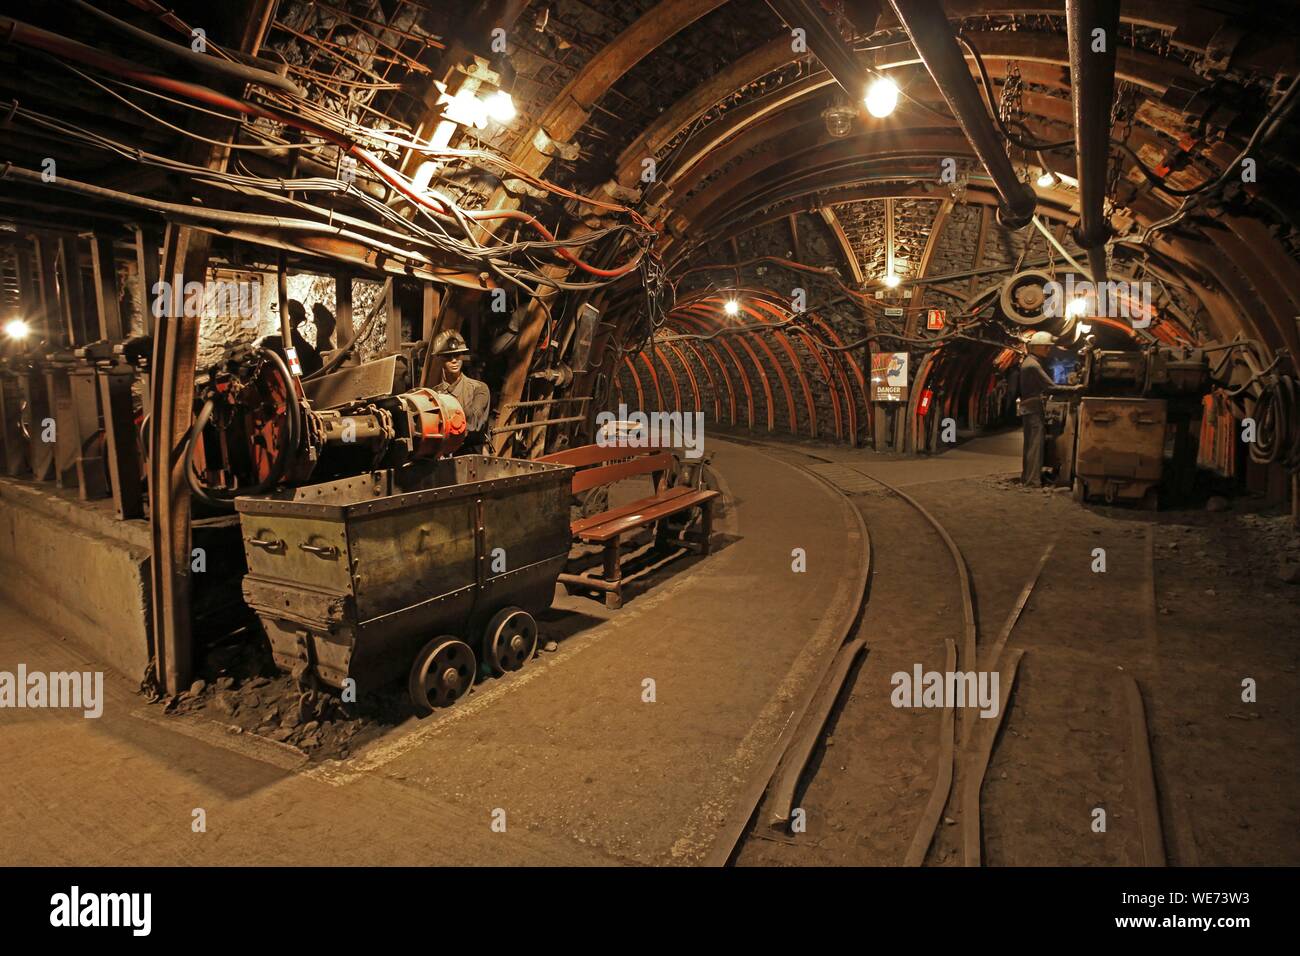 Francia, Nord, Lewarde, centro minero histórico catalogado como Patrimonio Mundial por la UNESCO, visitar la mina reconstituida Foto de stock